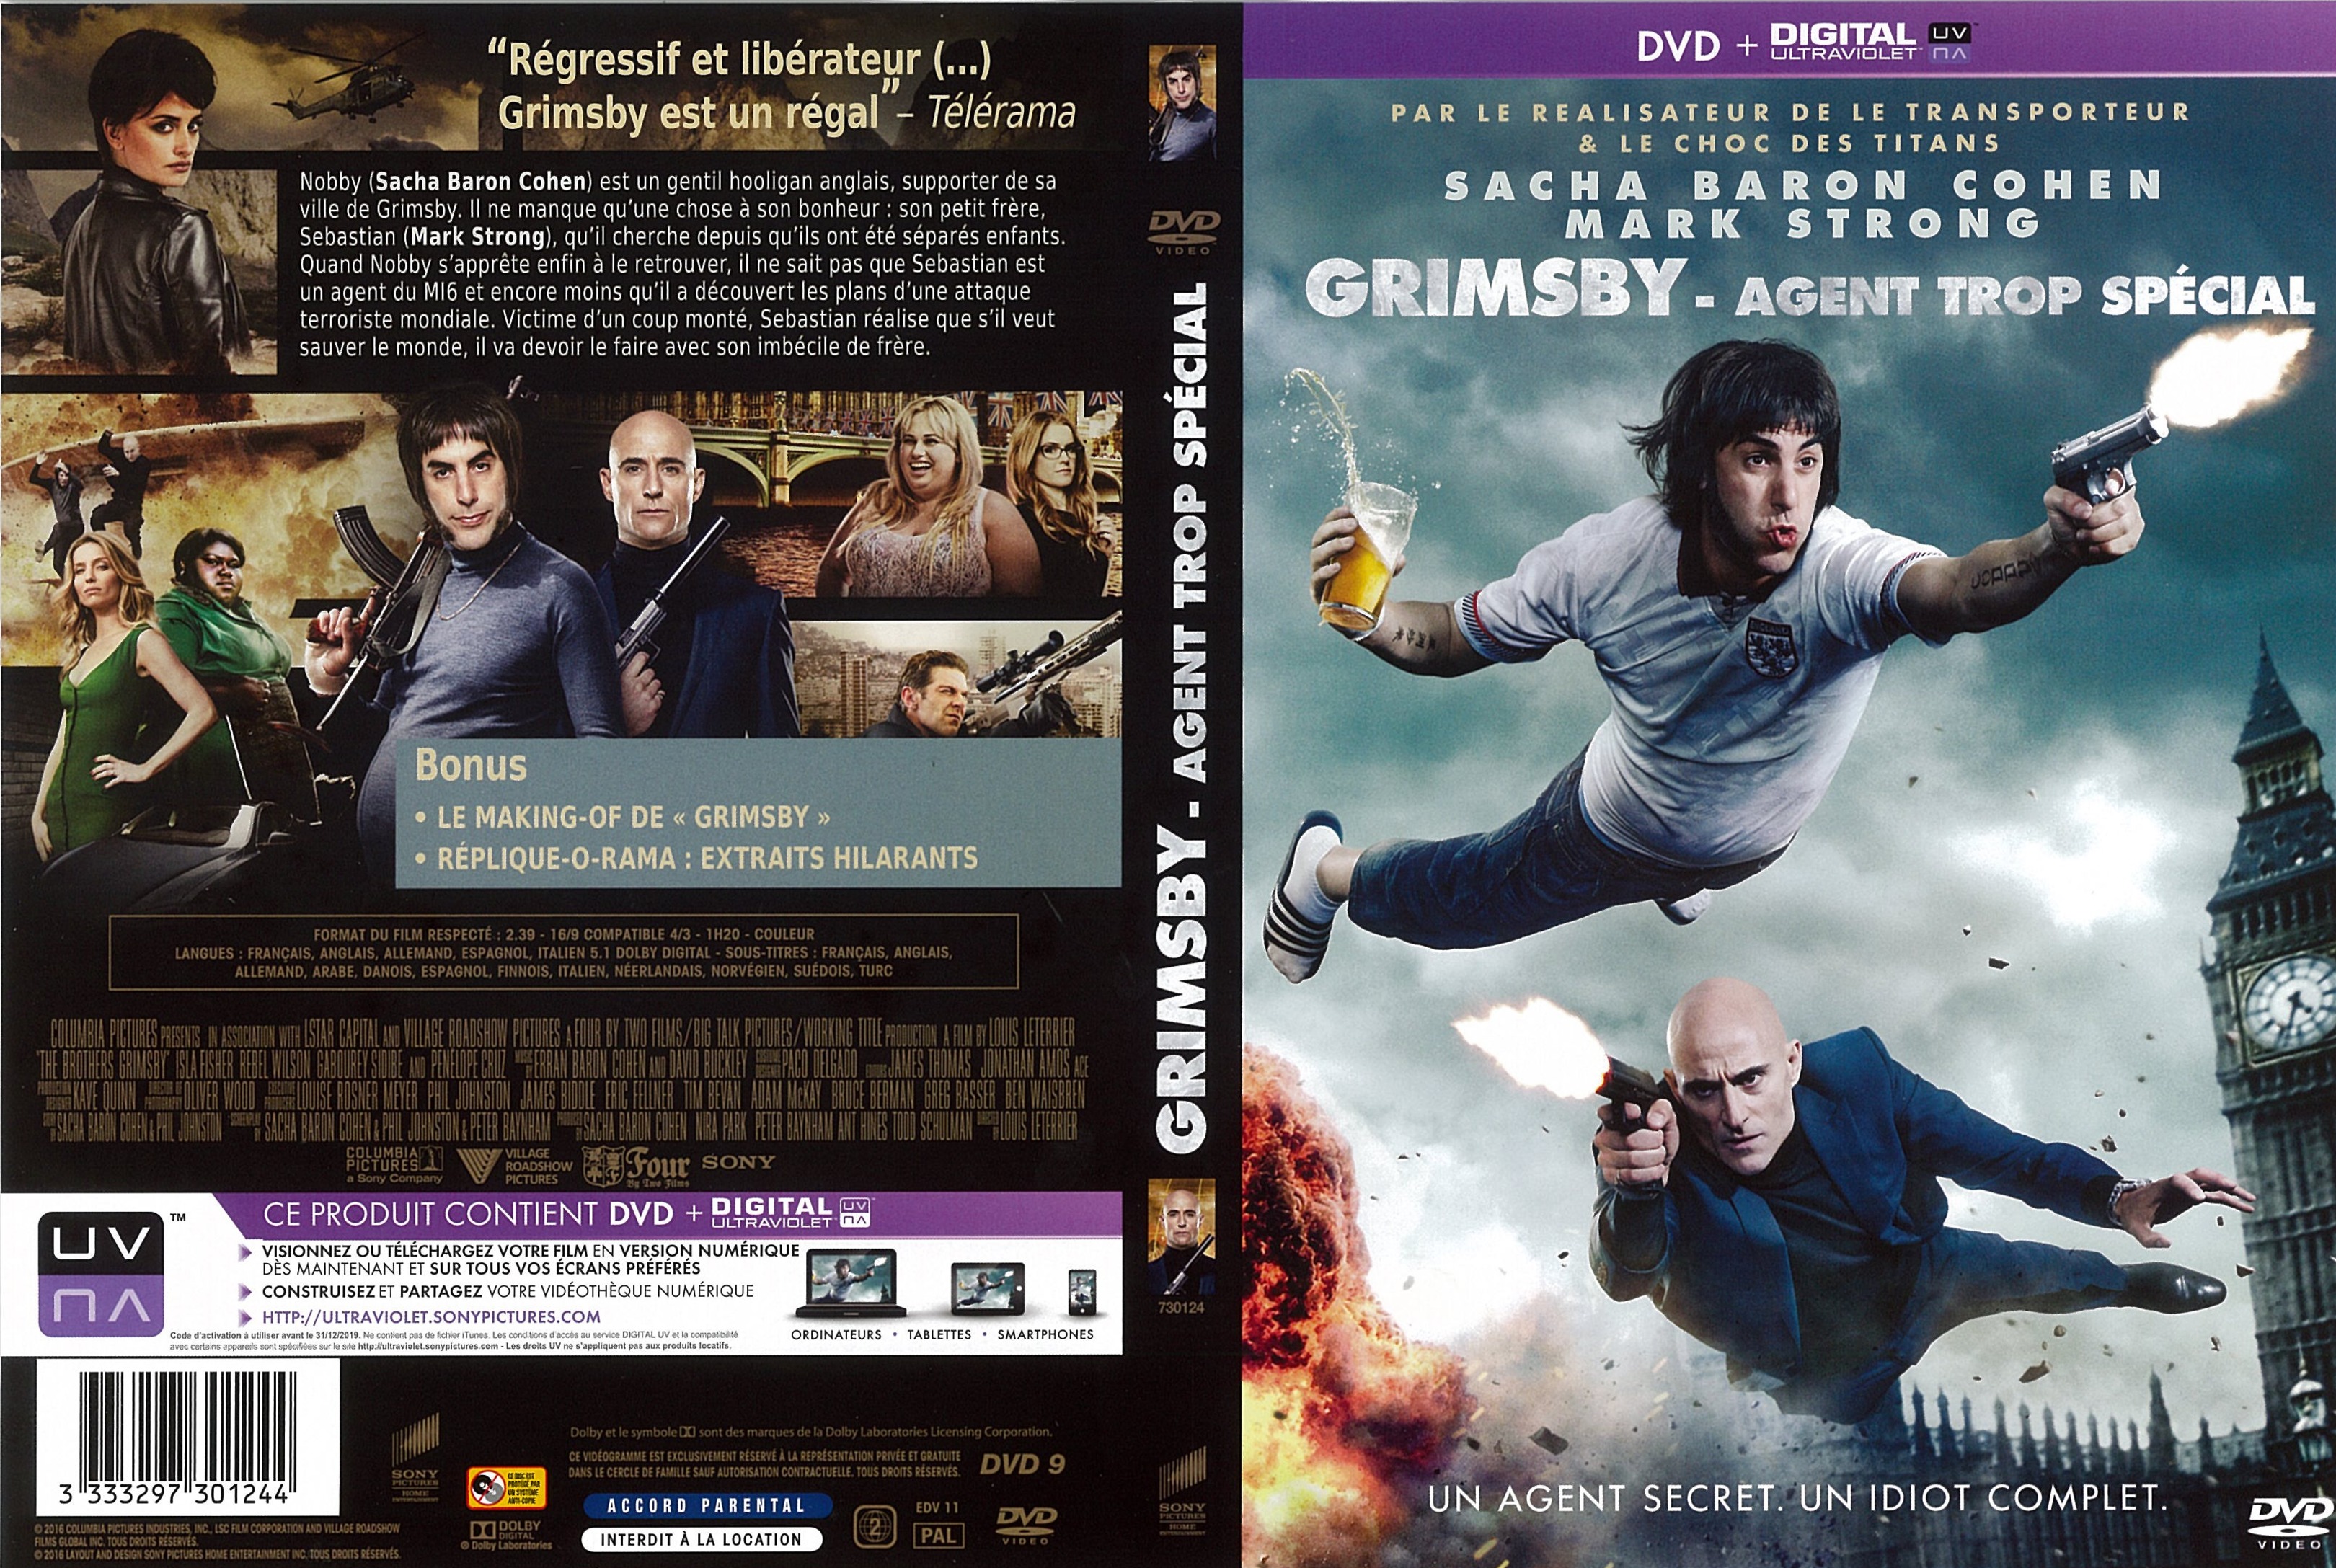 Jaquette DVD Grimsby Agent trop spcial